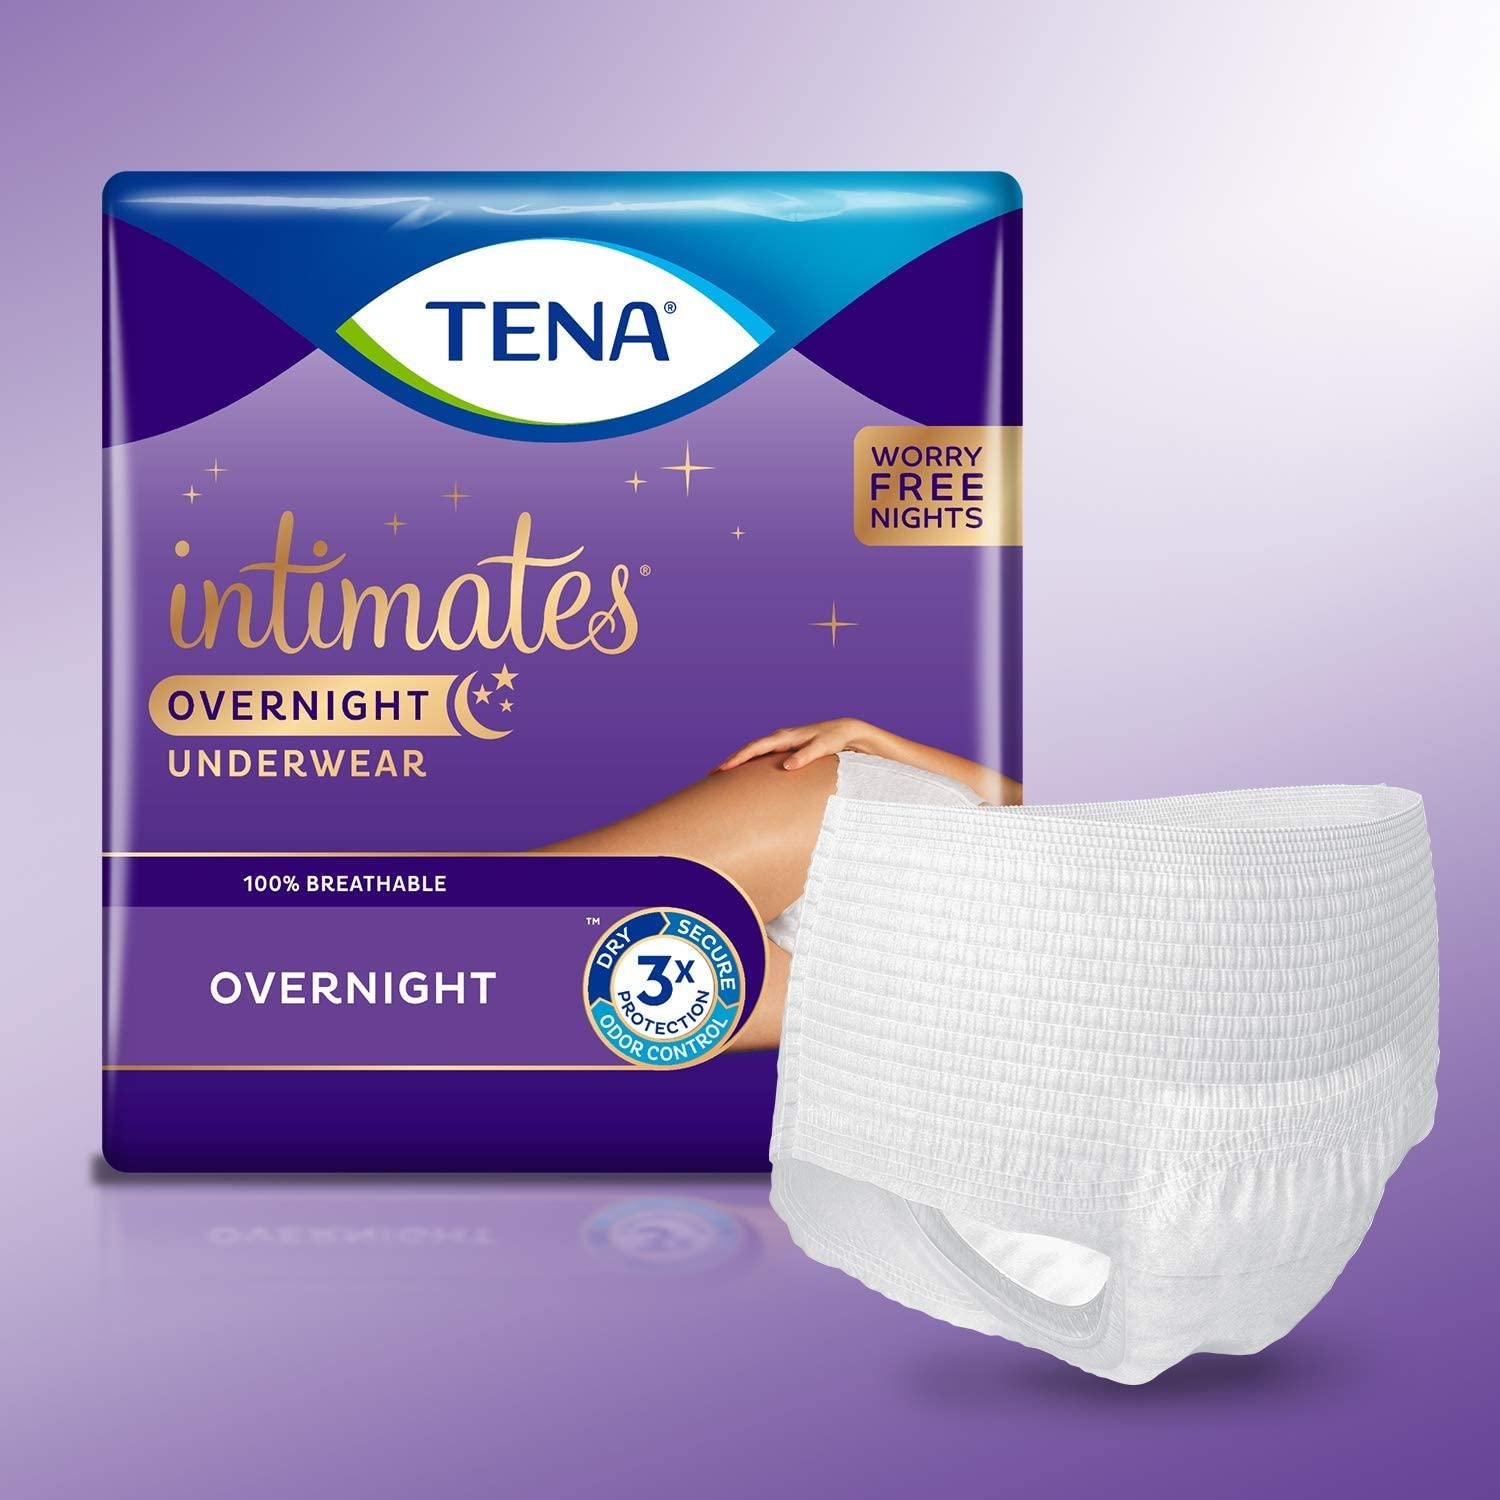 Tena Intimates Overnight Underwear XLarge, 48 ct Nepal